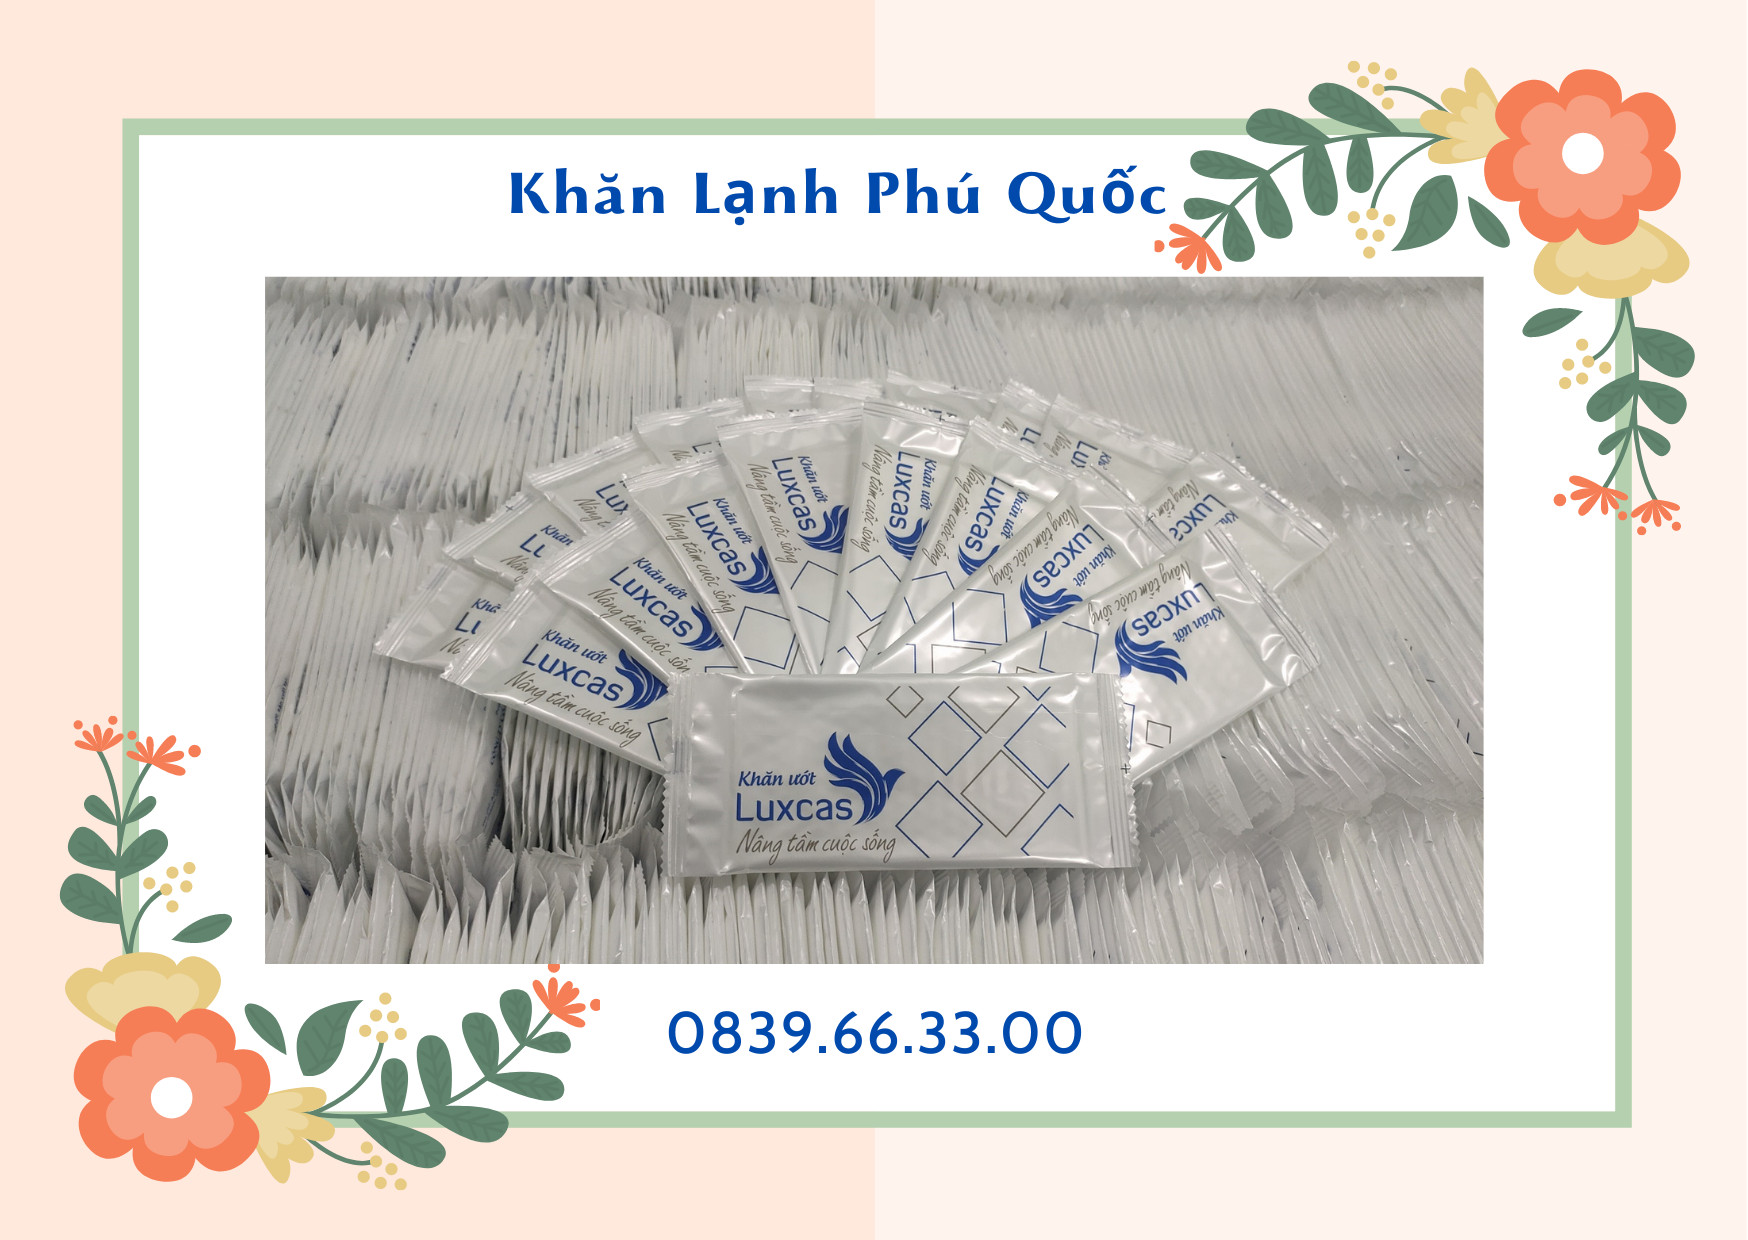 lam-khan-uot-phu-quoc-5